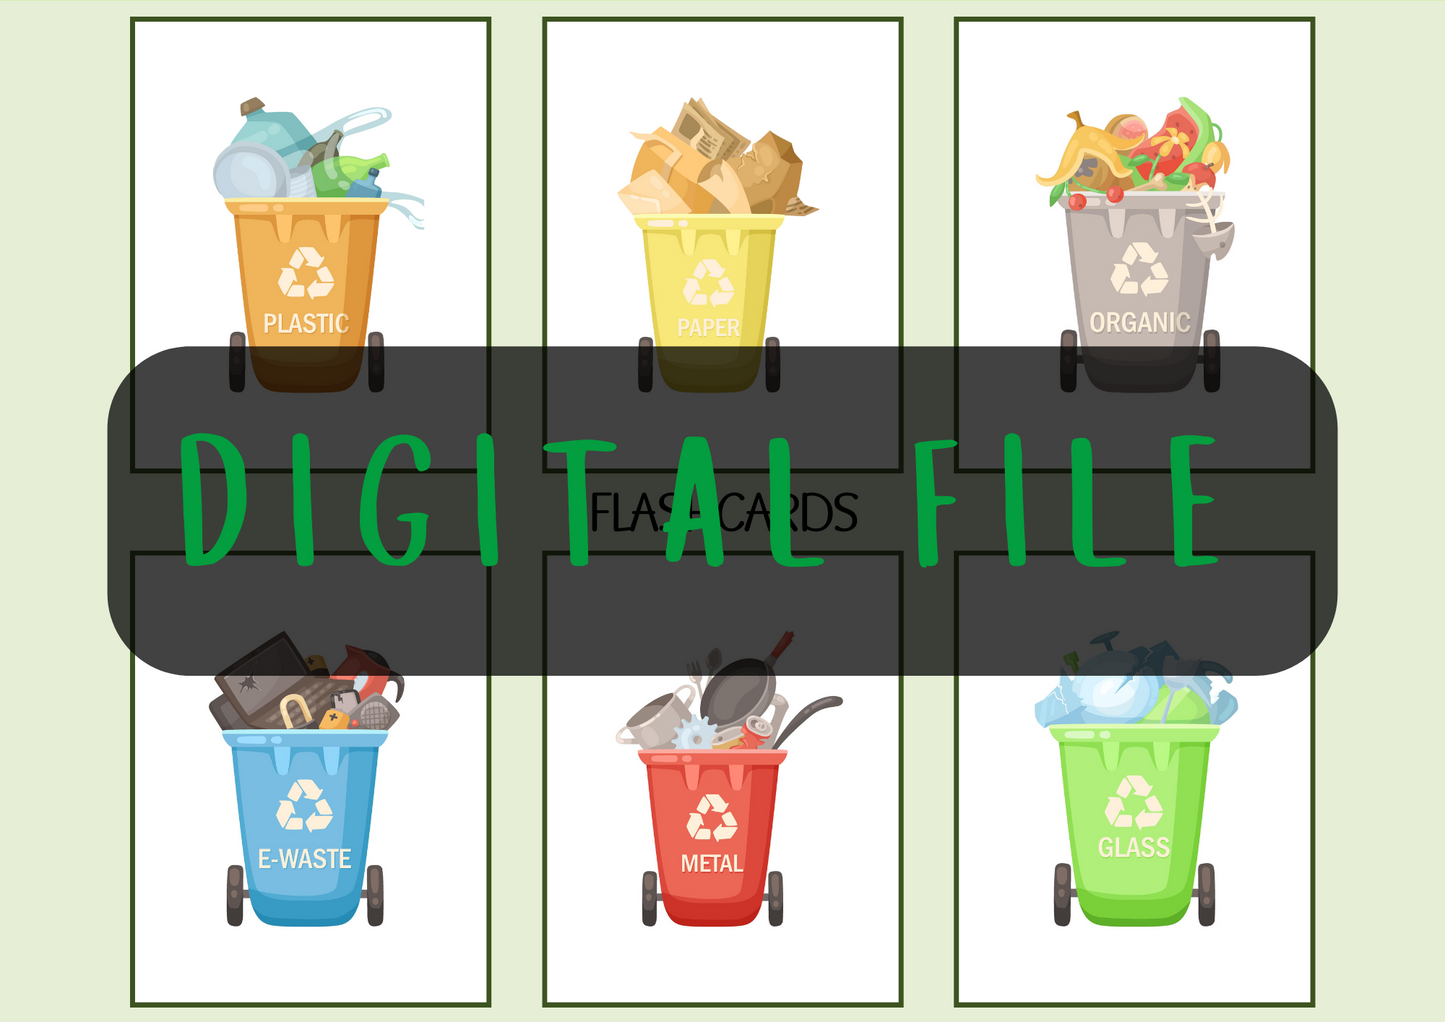 Recycling Activity Bundle